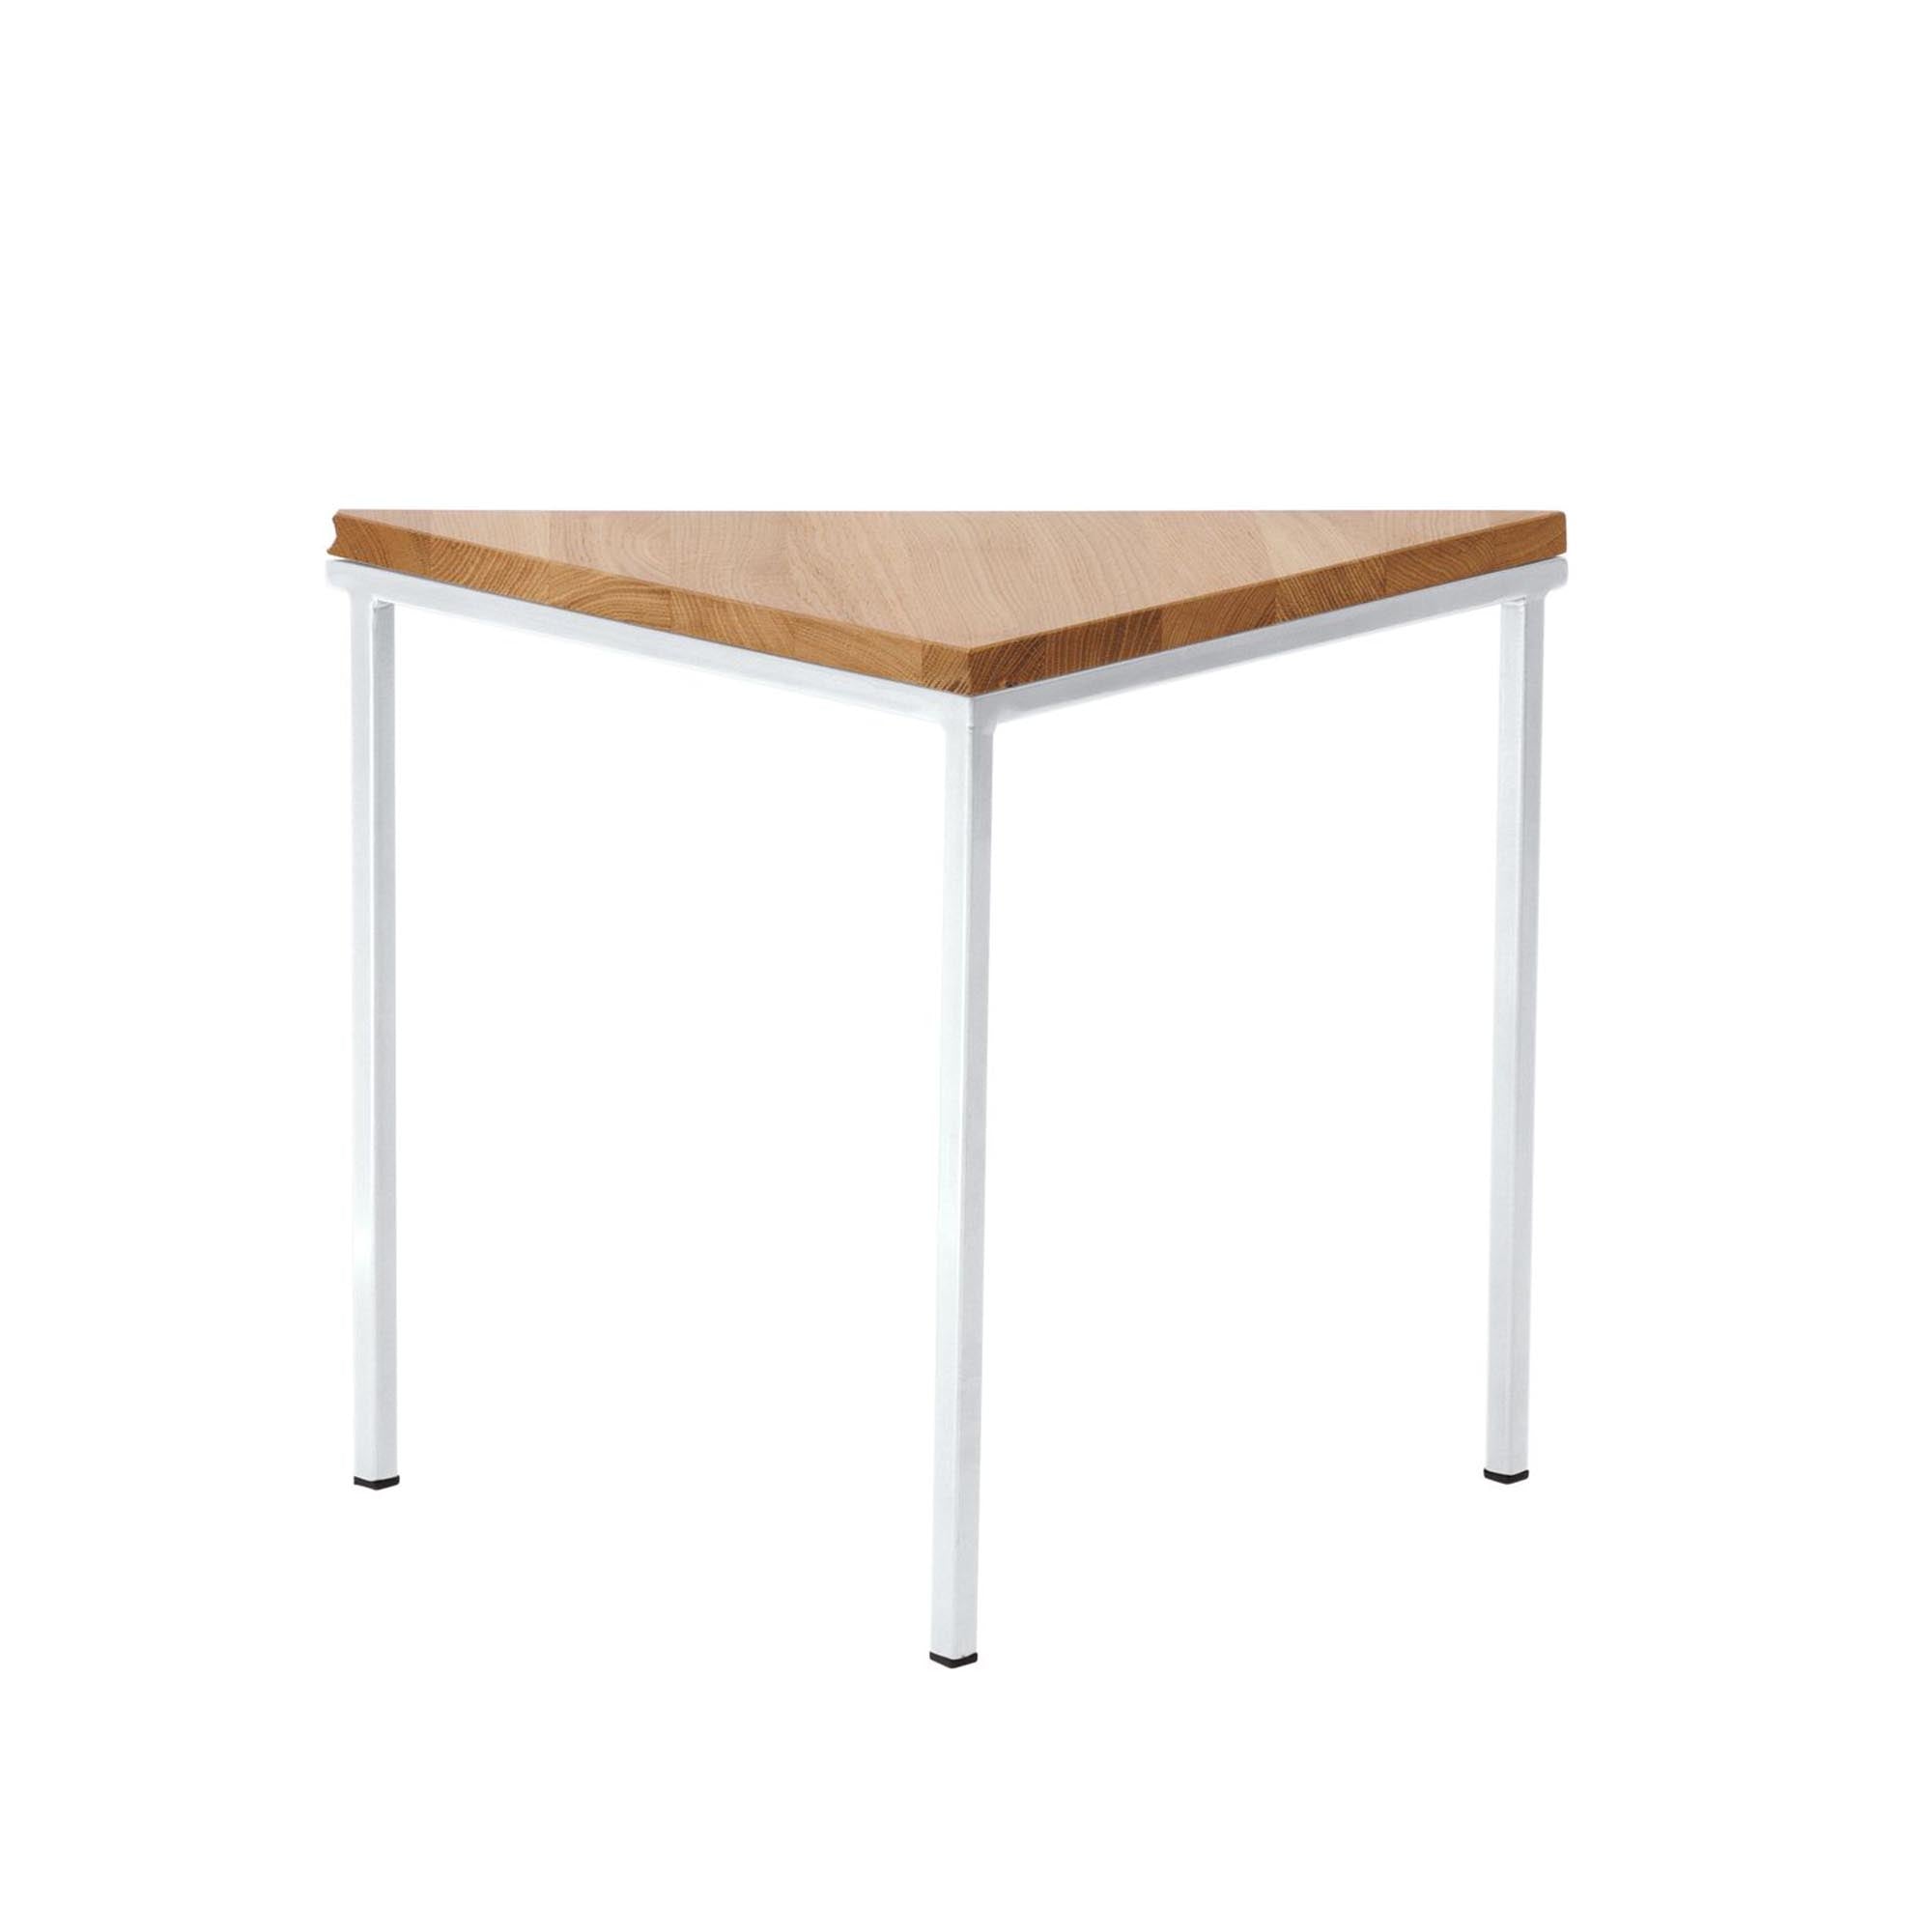 Tripod Table, Oak Wood, Natural Colour white frame, side view